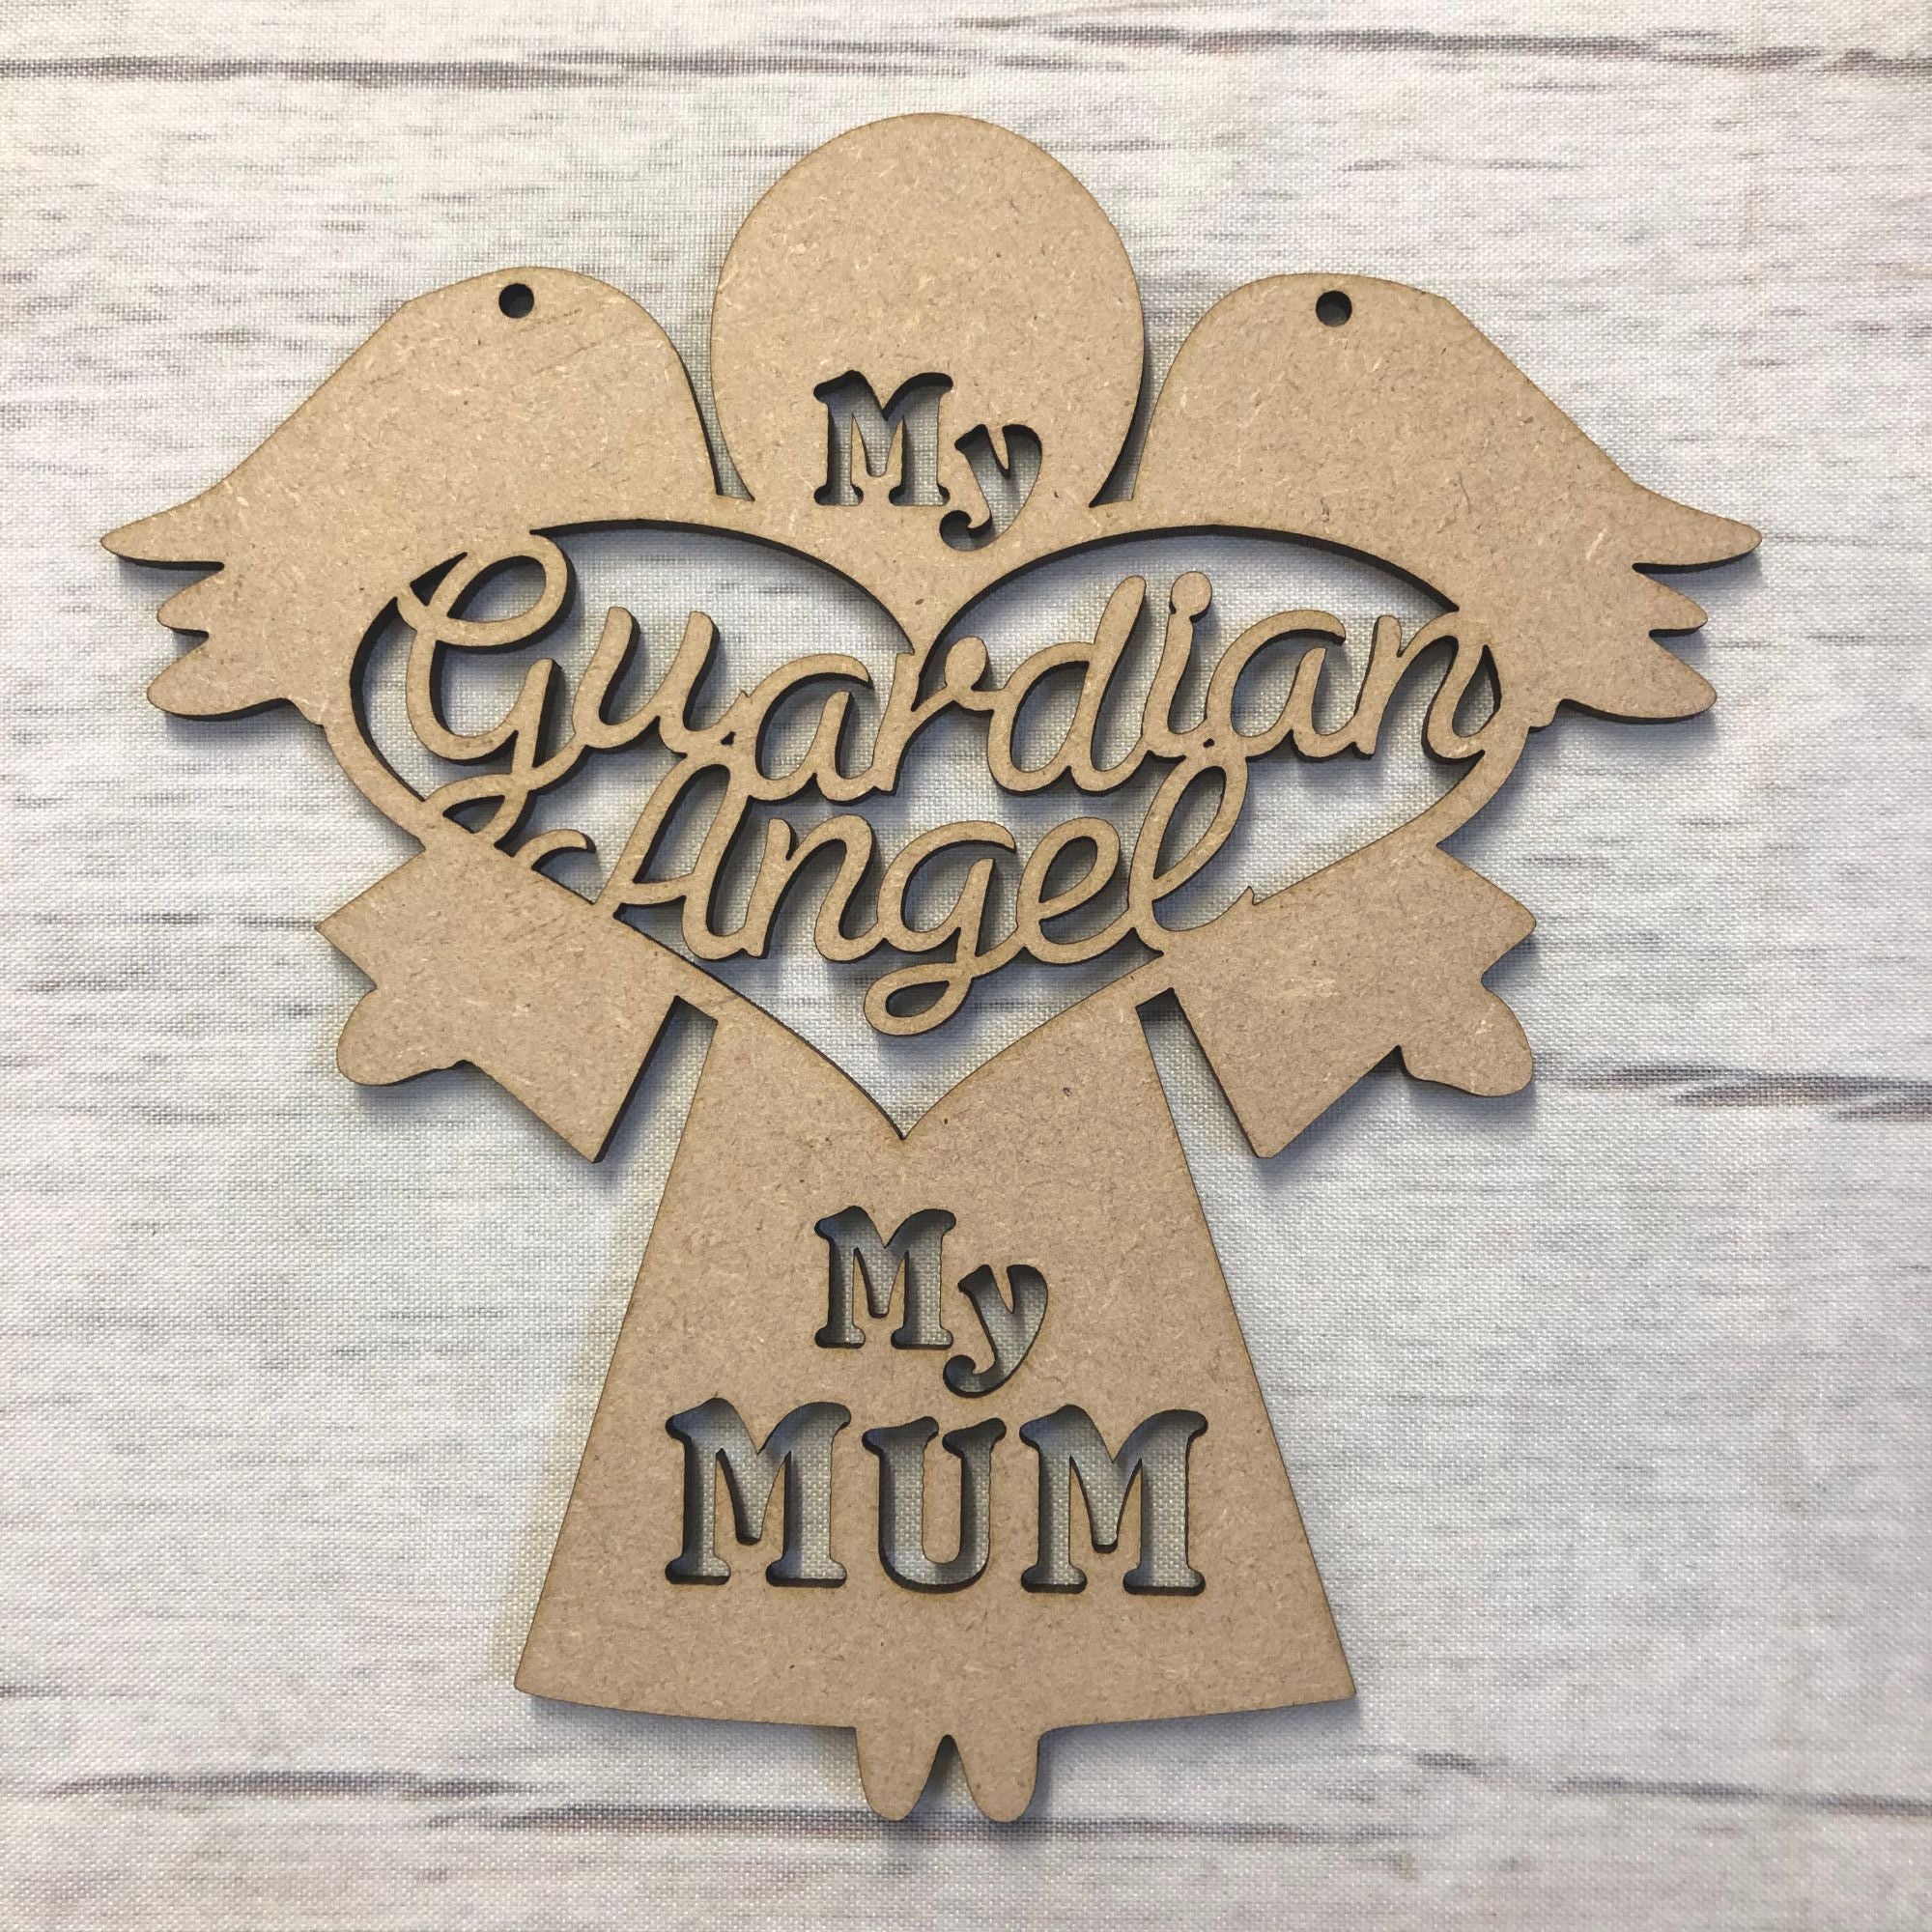 My guardian angel, my Mum' - craft hanger